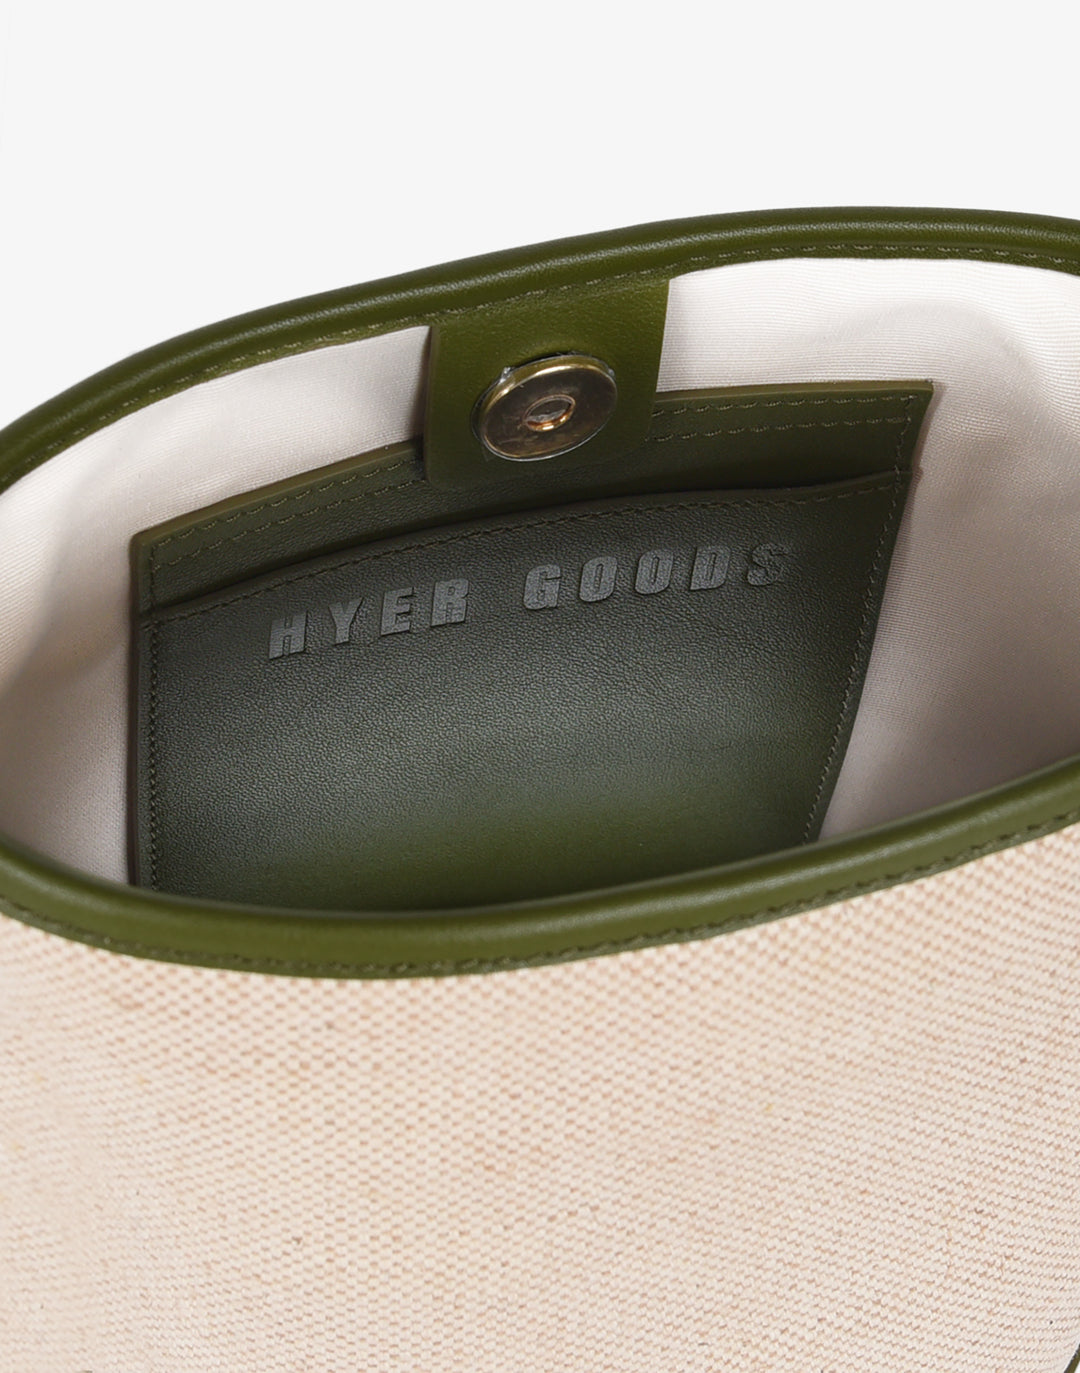 hyer goods summer cotton canvas mini bucket bag natural olive#color_linen/oliveahyer goods summer cotton canvas mini bucket bag natural olive#color_linen-olive